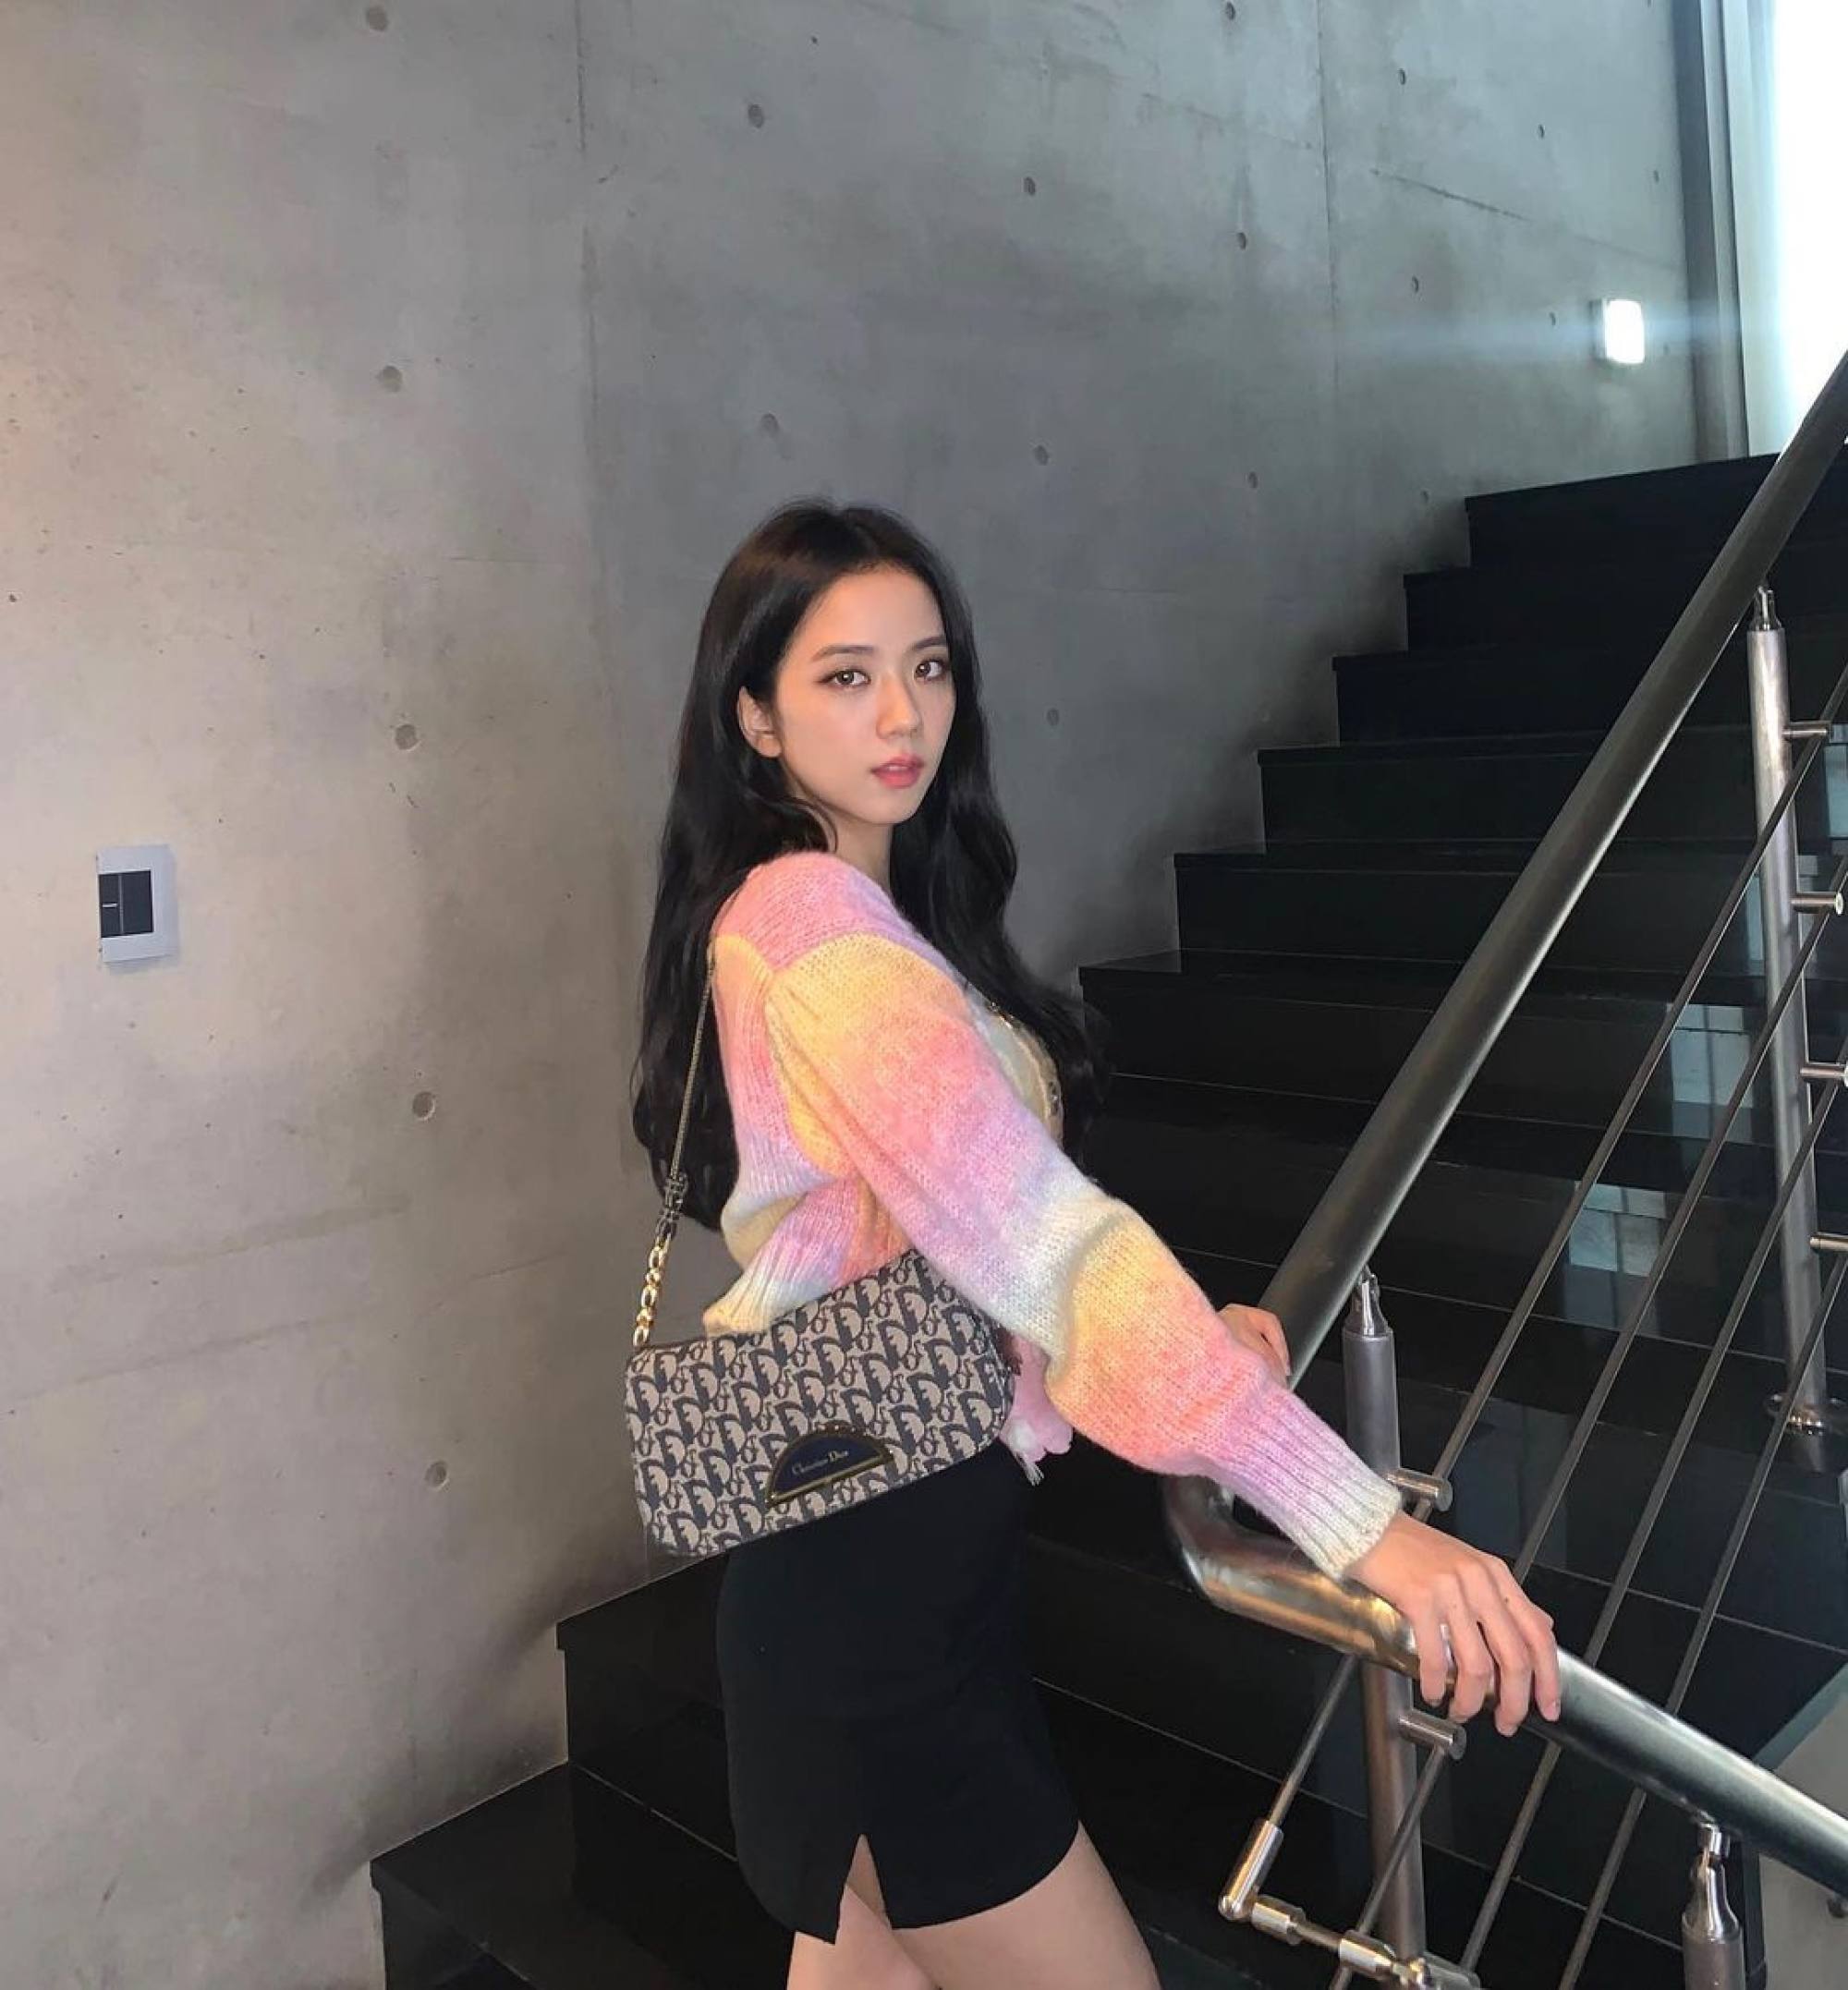 Jisoo's fashion moments: The Blackpink star's favourite Dior handbags